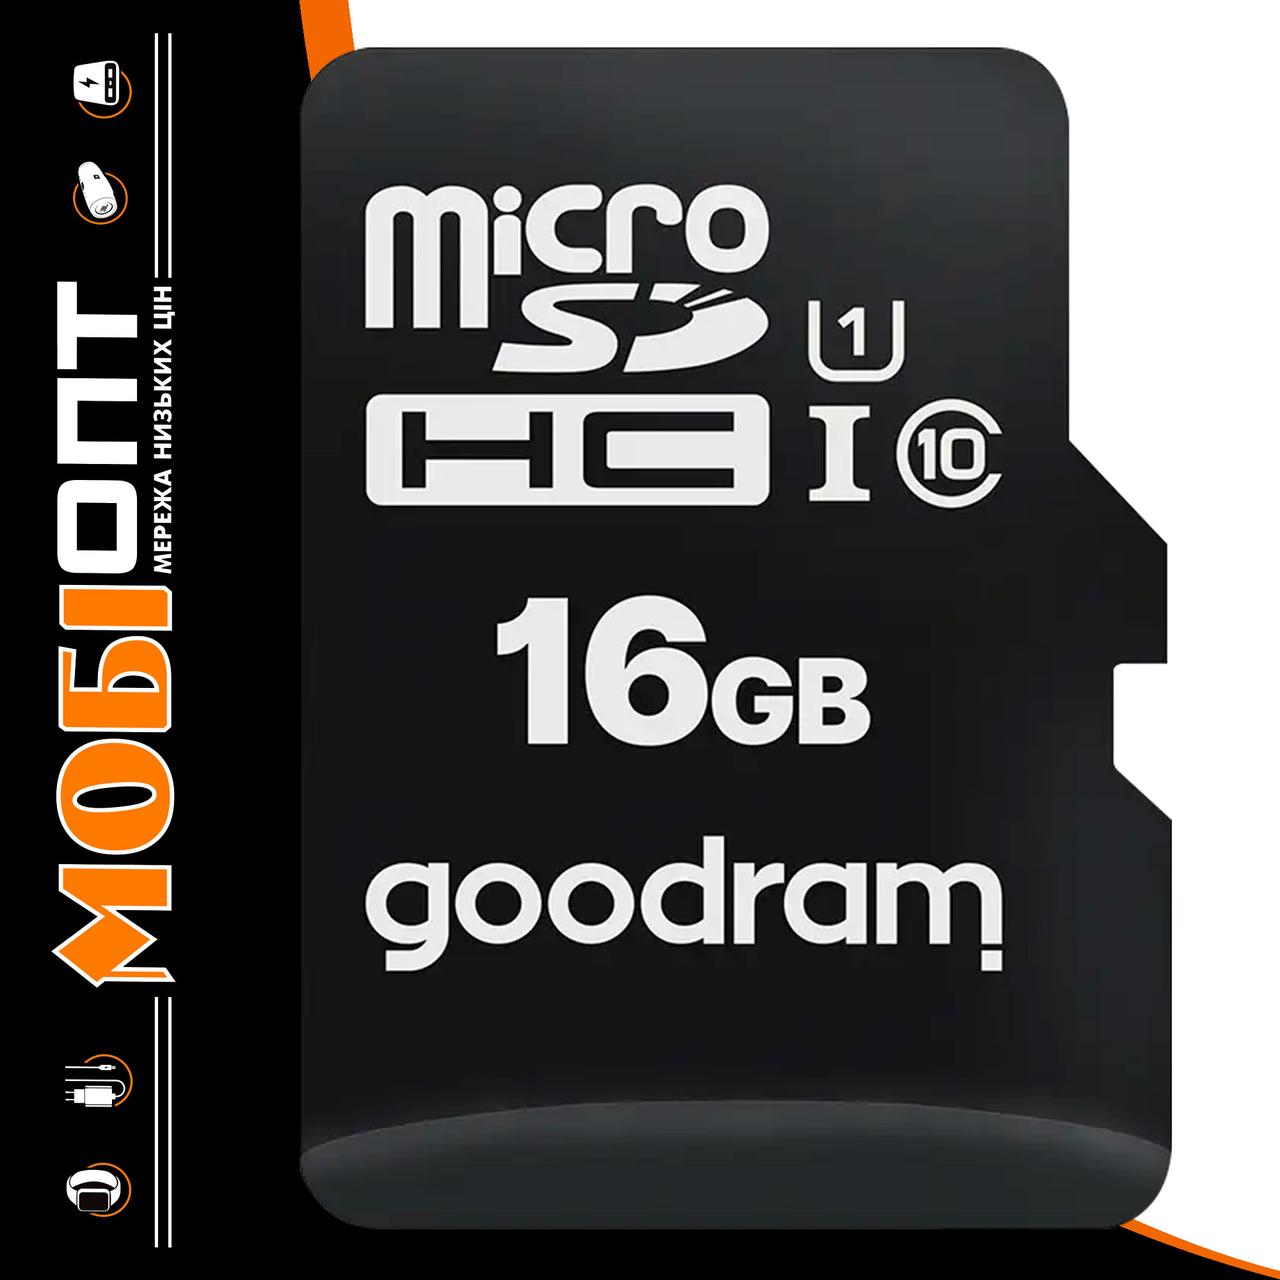 Micro SD 16GB/10 class Good Ram